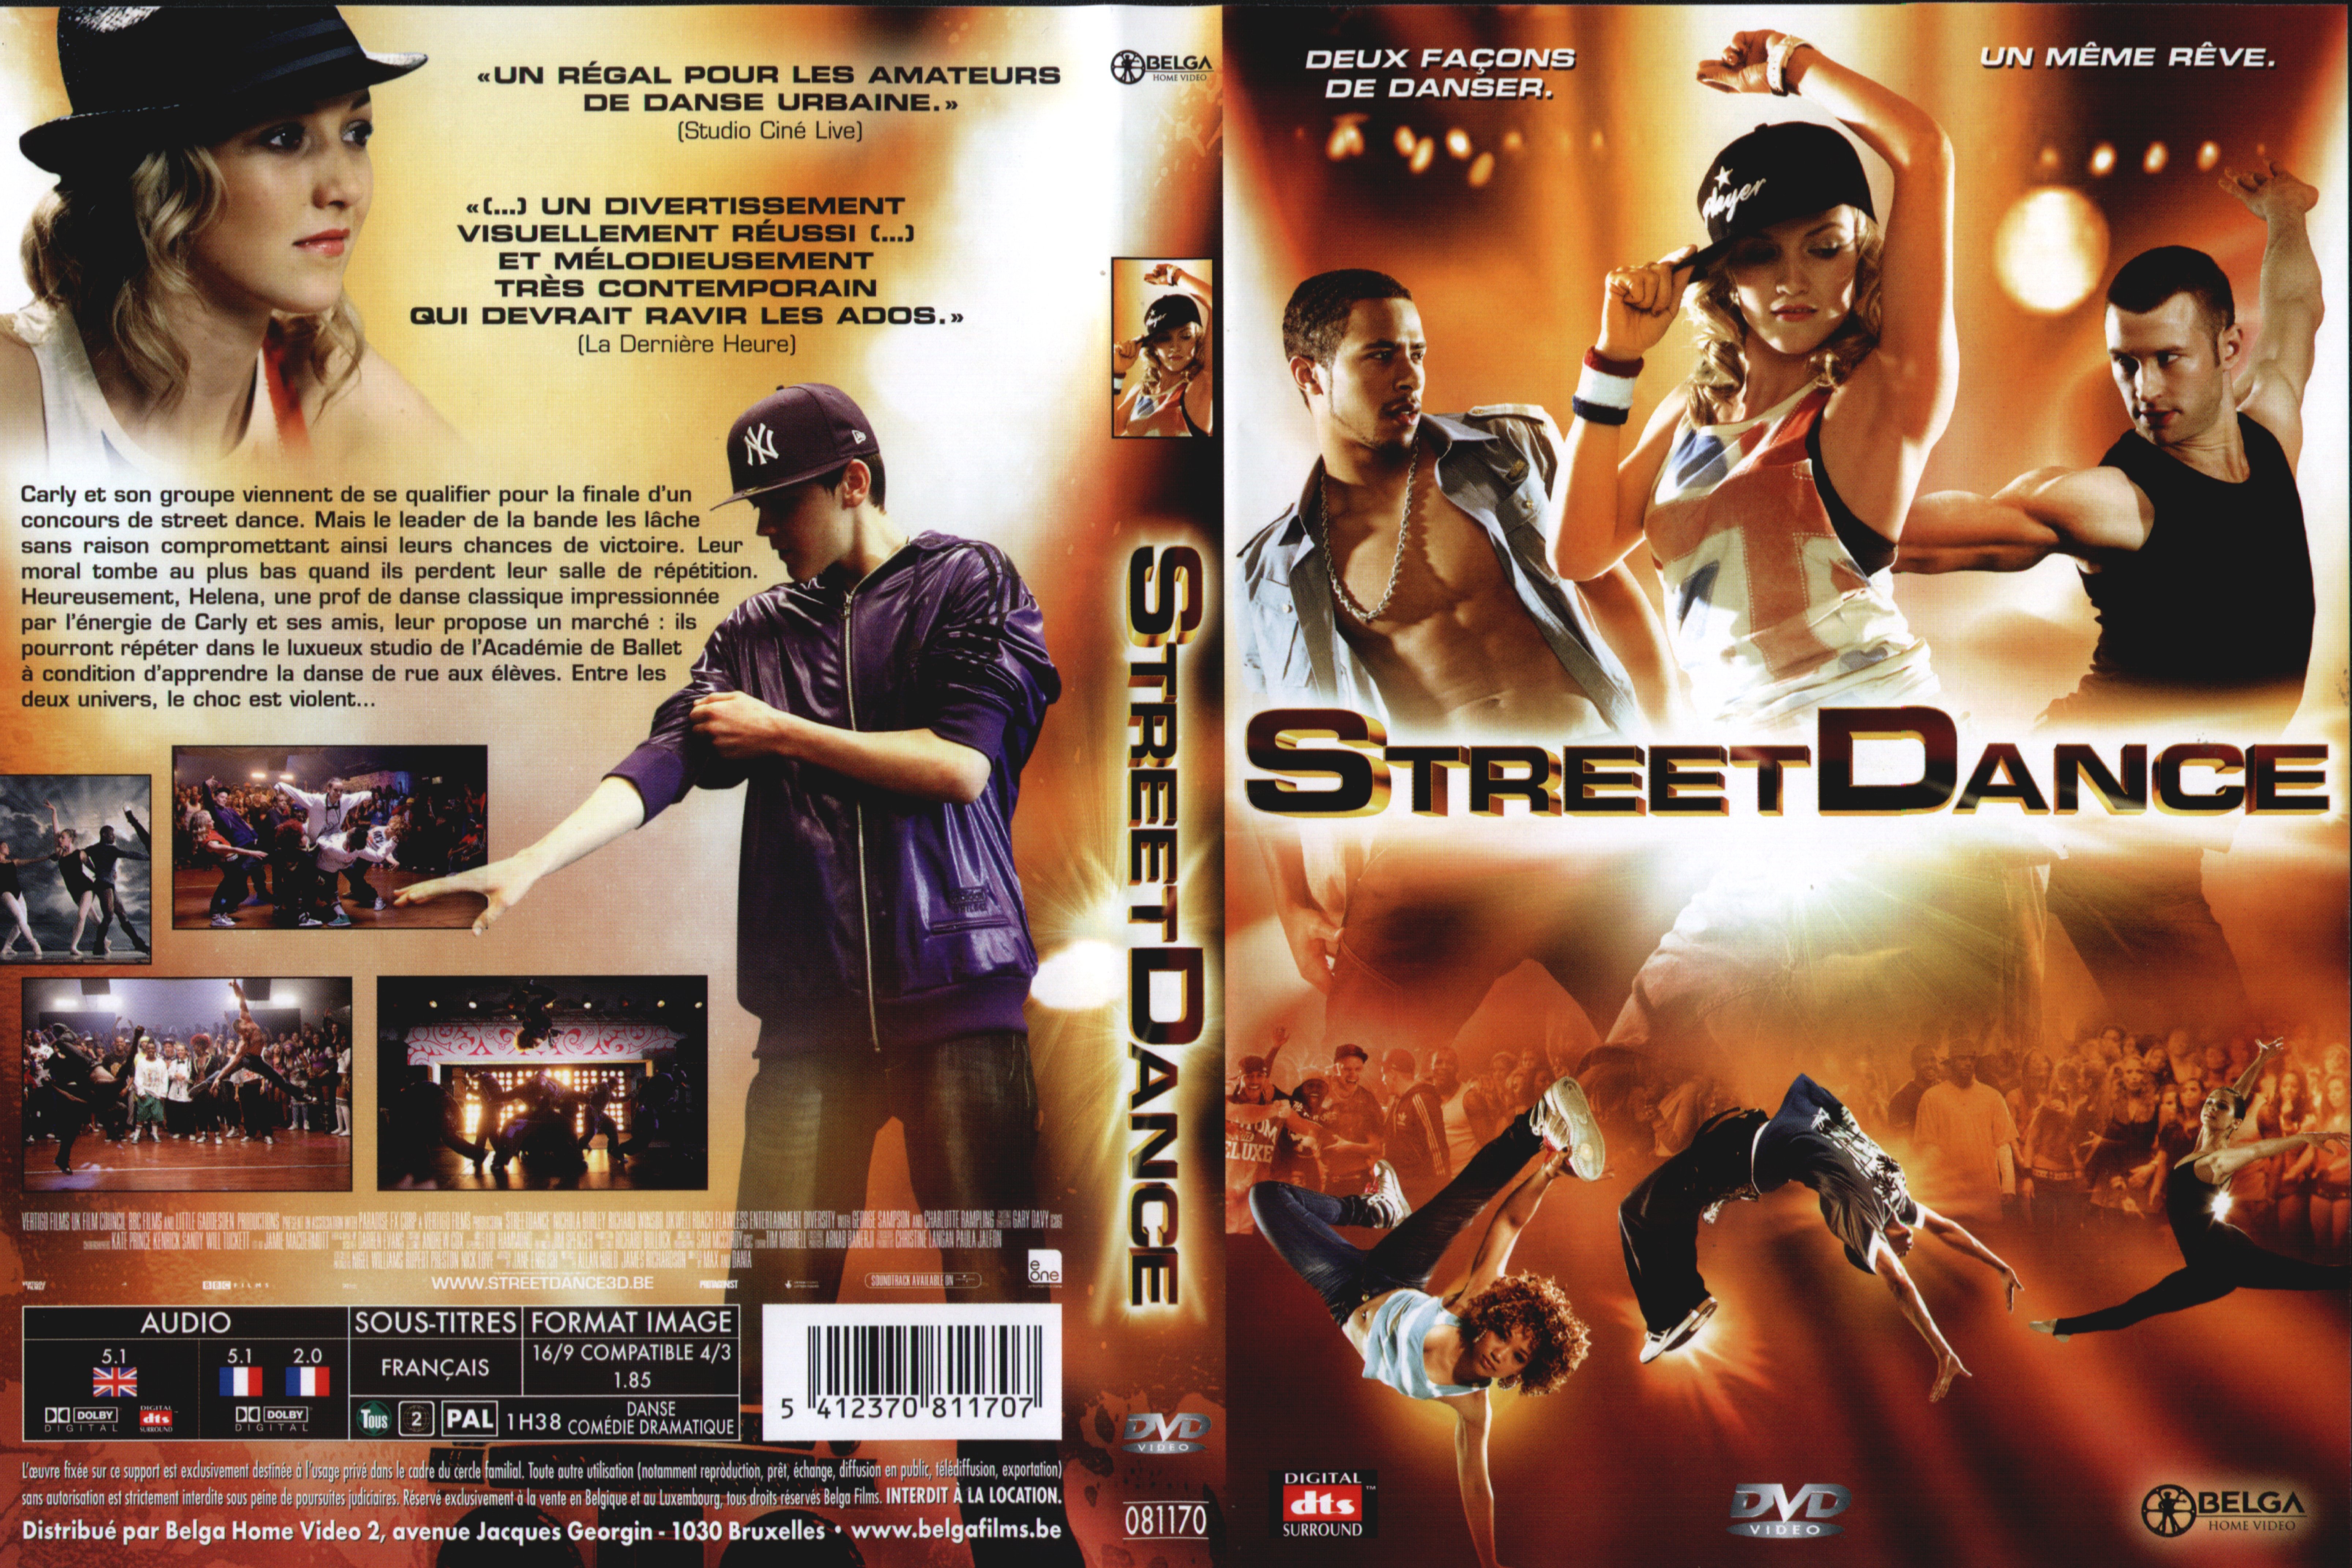 Jaquette DVD Street dance v2